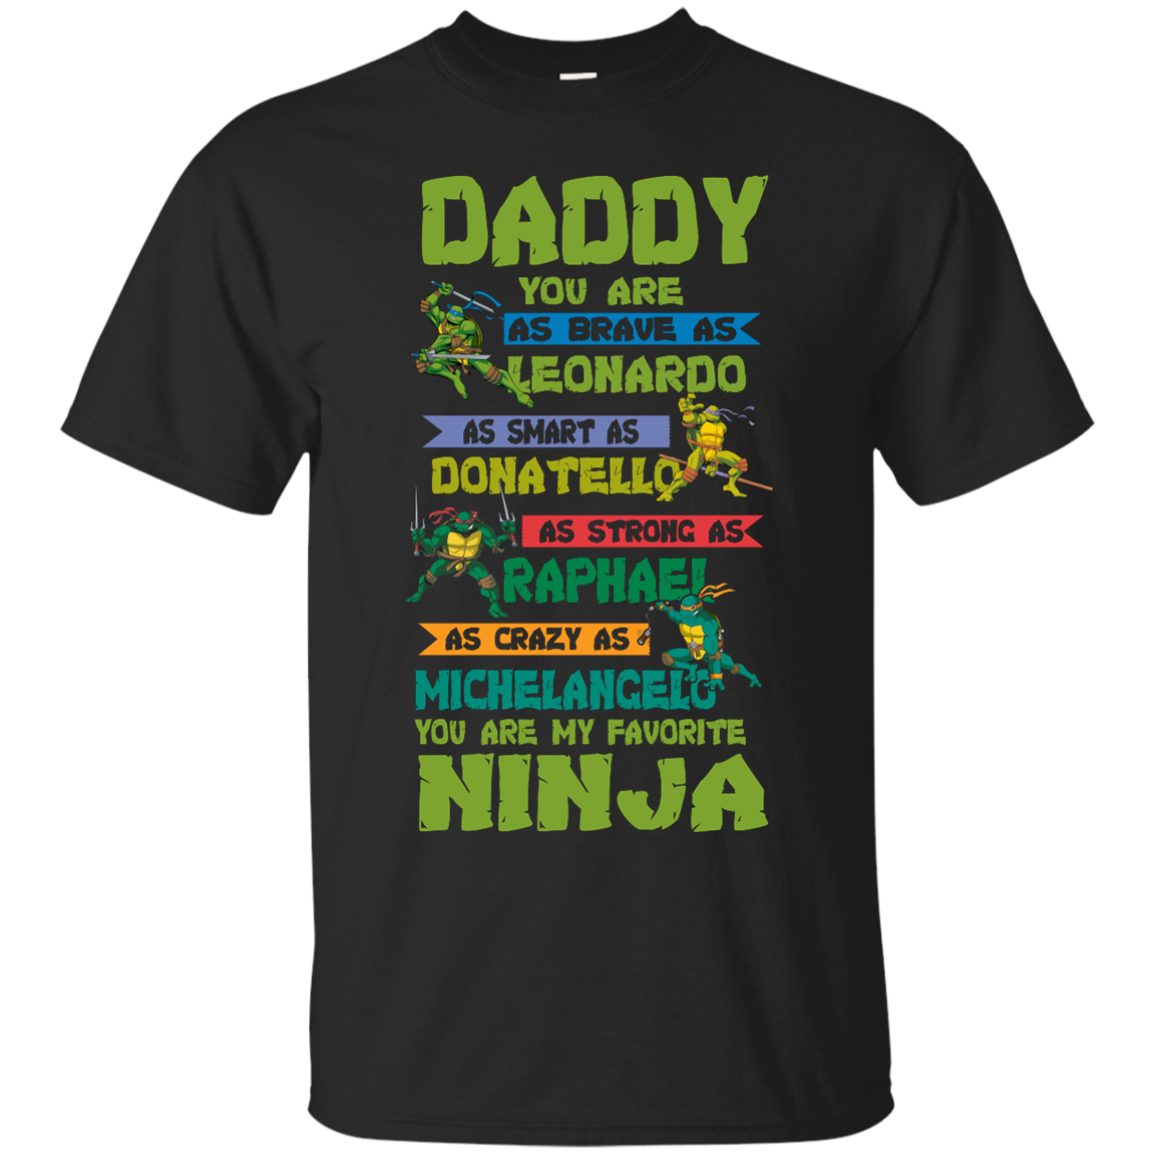 Ninja Turtles: Daddy You Are As Brave As Leonardo Smart As Donatello T-Shirts, Hoodies